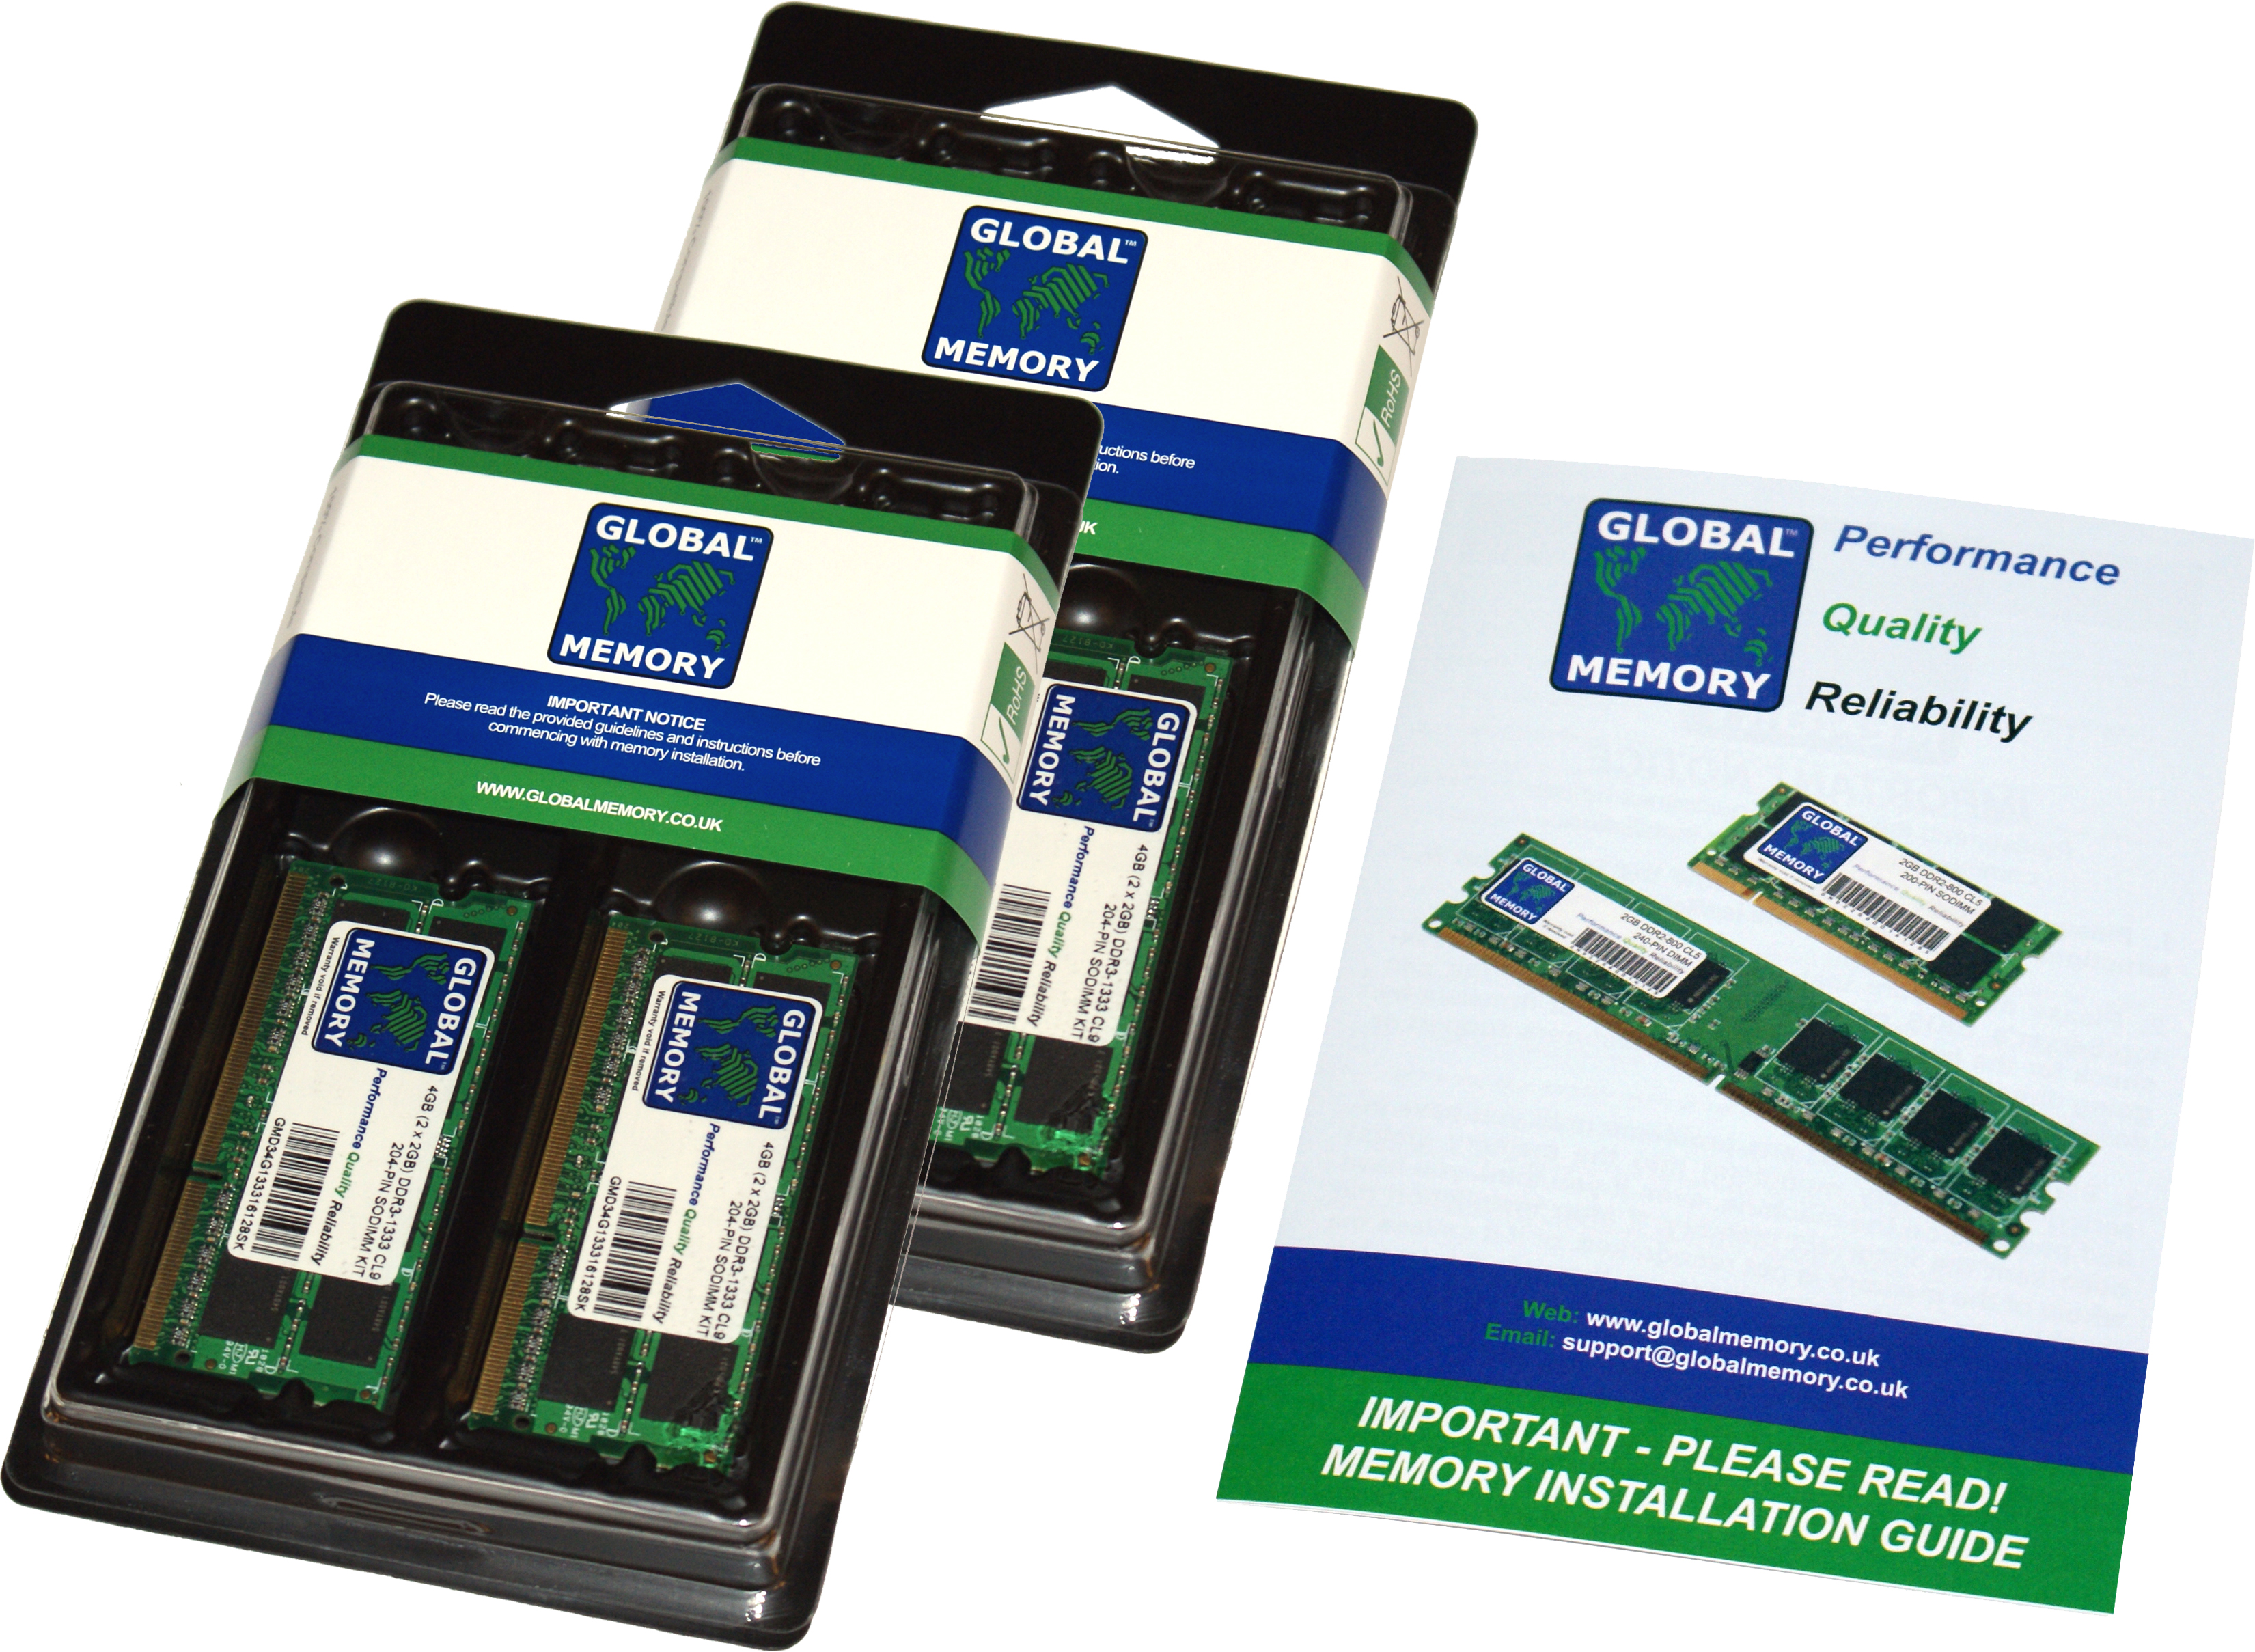 32GB (4 x 8GB) DDR3 1866MHz PC3-14900 204-PIN SODIMM MEMORY RAM KIT FOR LAPTOPS/NOTEBOOKS